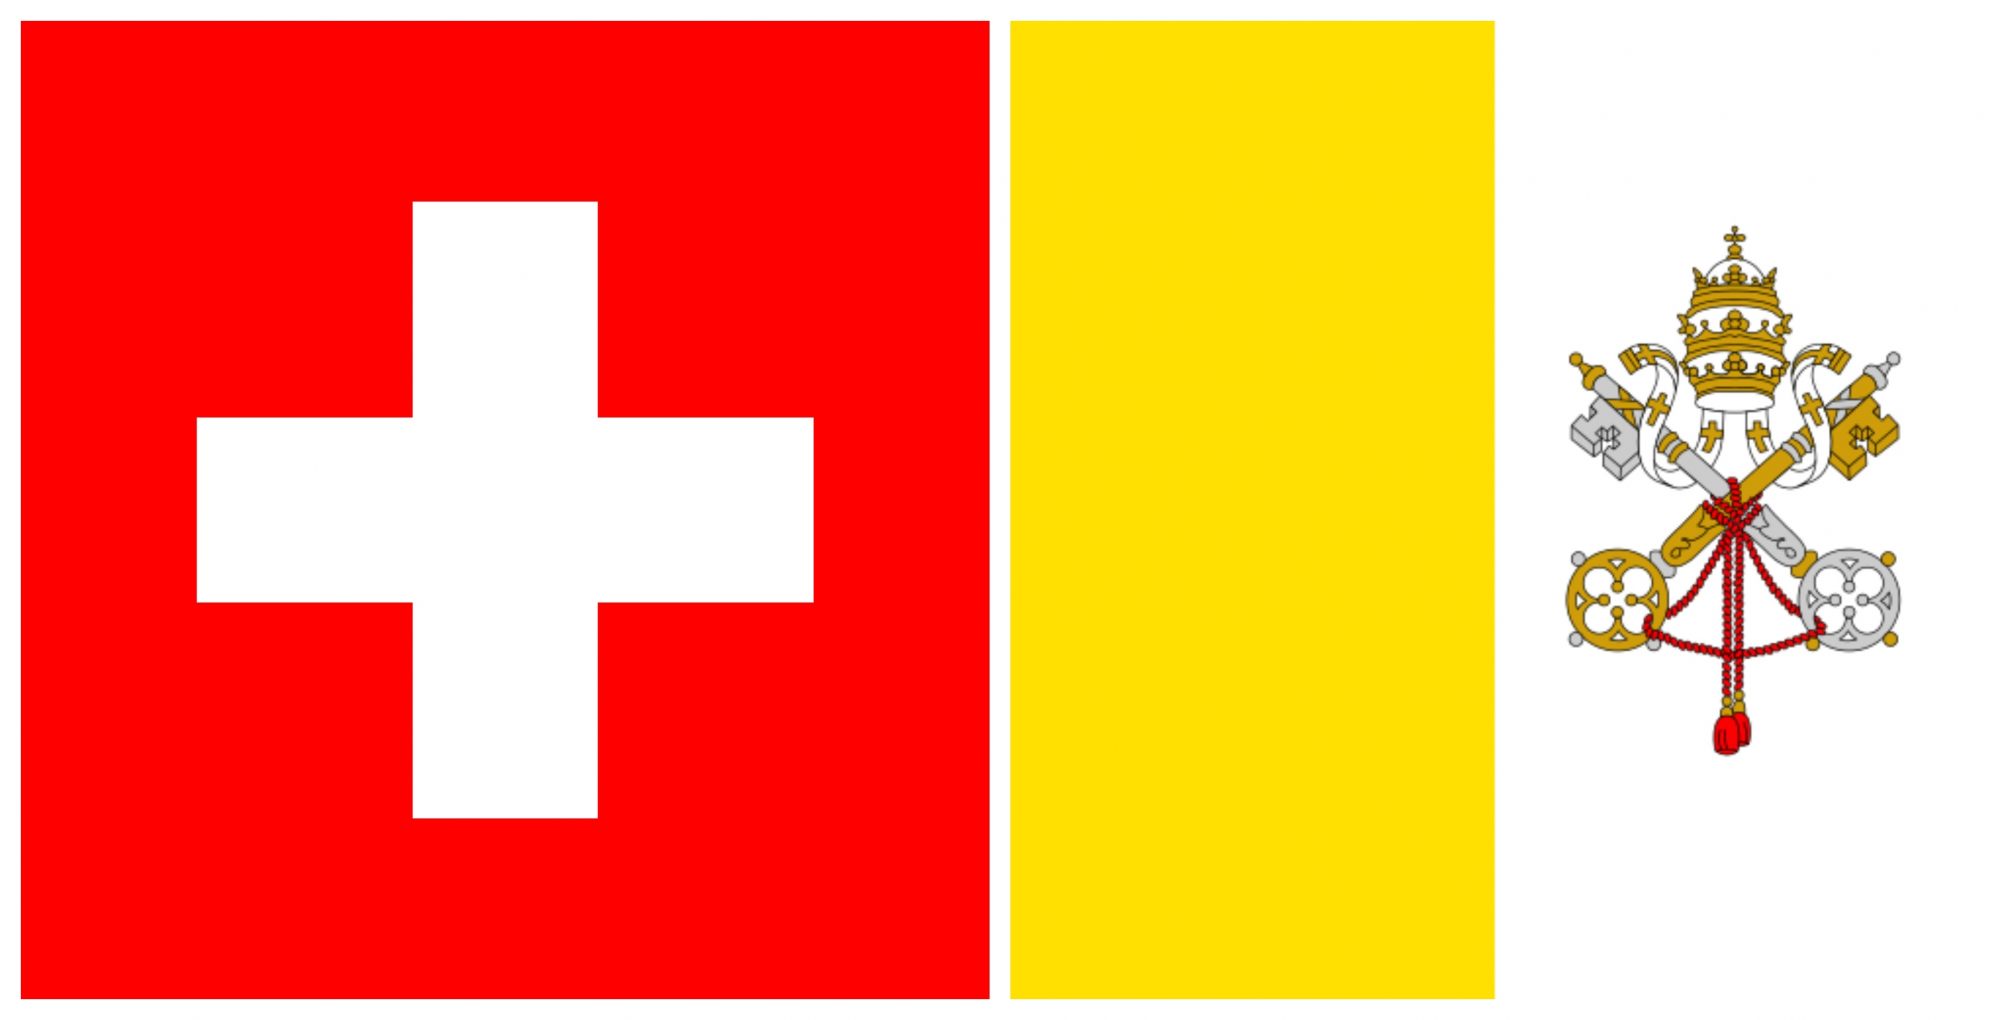 Флаг какой страны в форме квадрата. Флаг Швейцарии и Ватикана. Государство Ватикан флаг. Квадратный флаг. Флаг в форме квадрата.